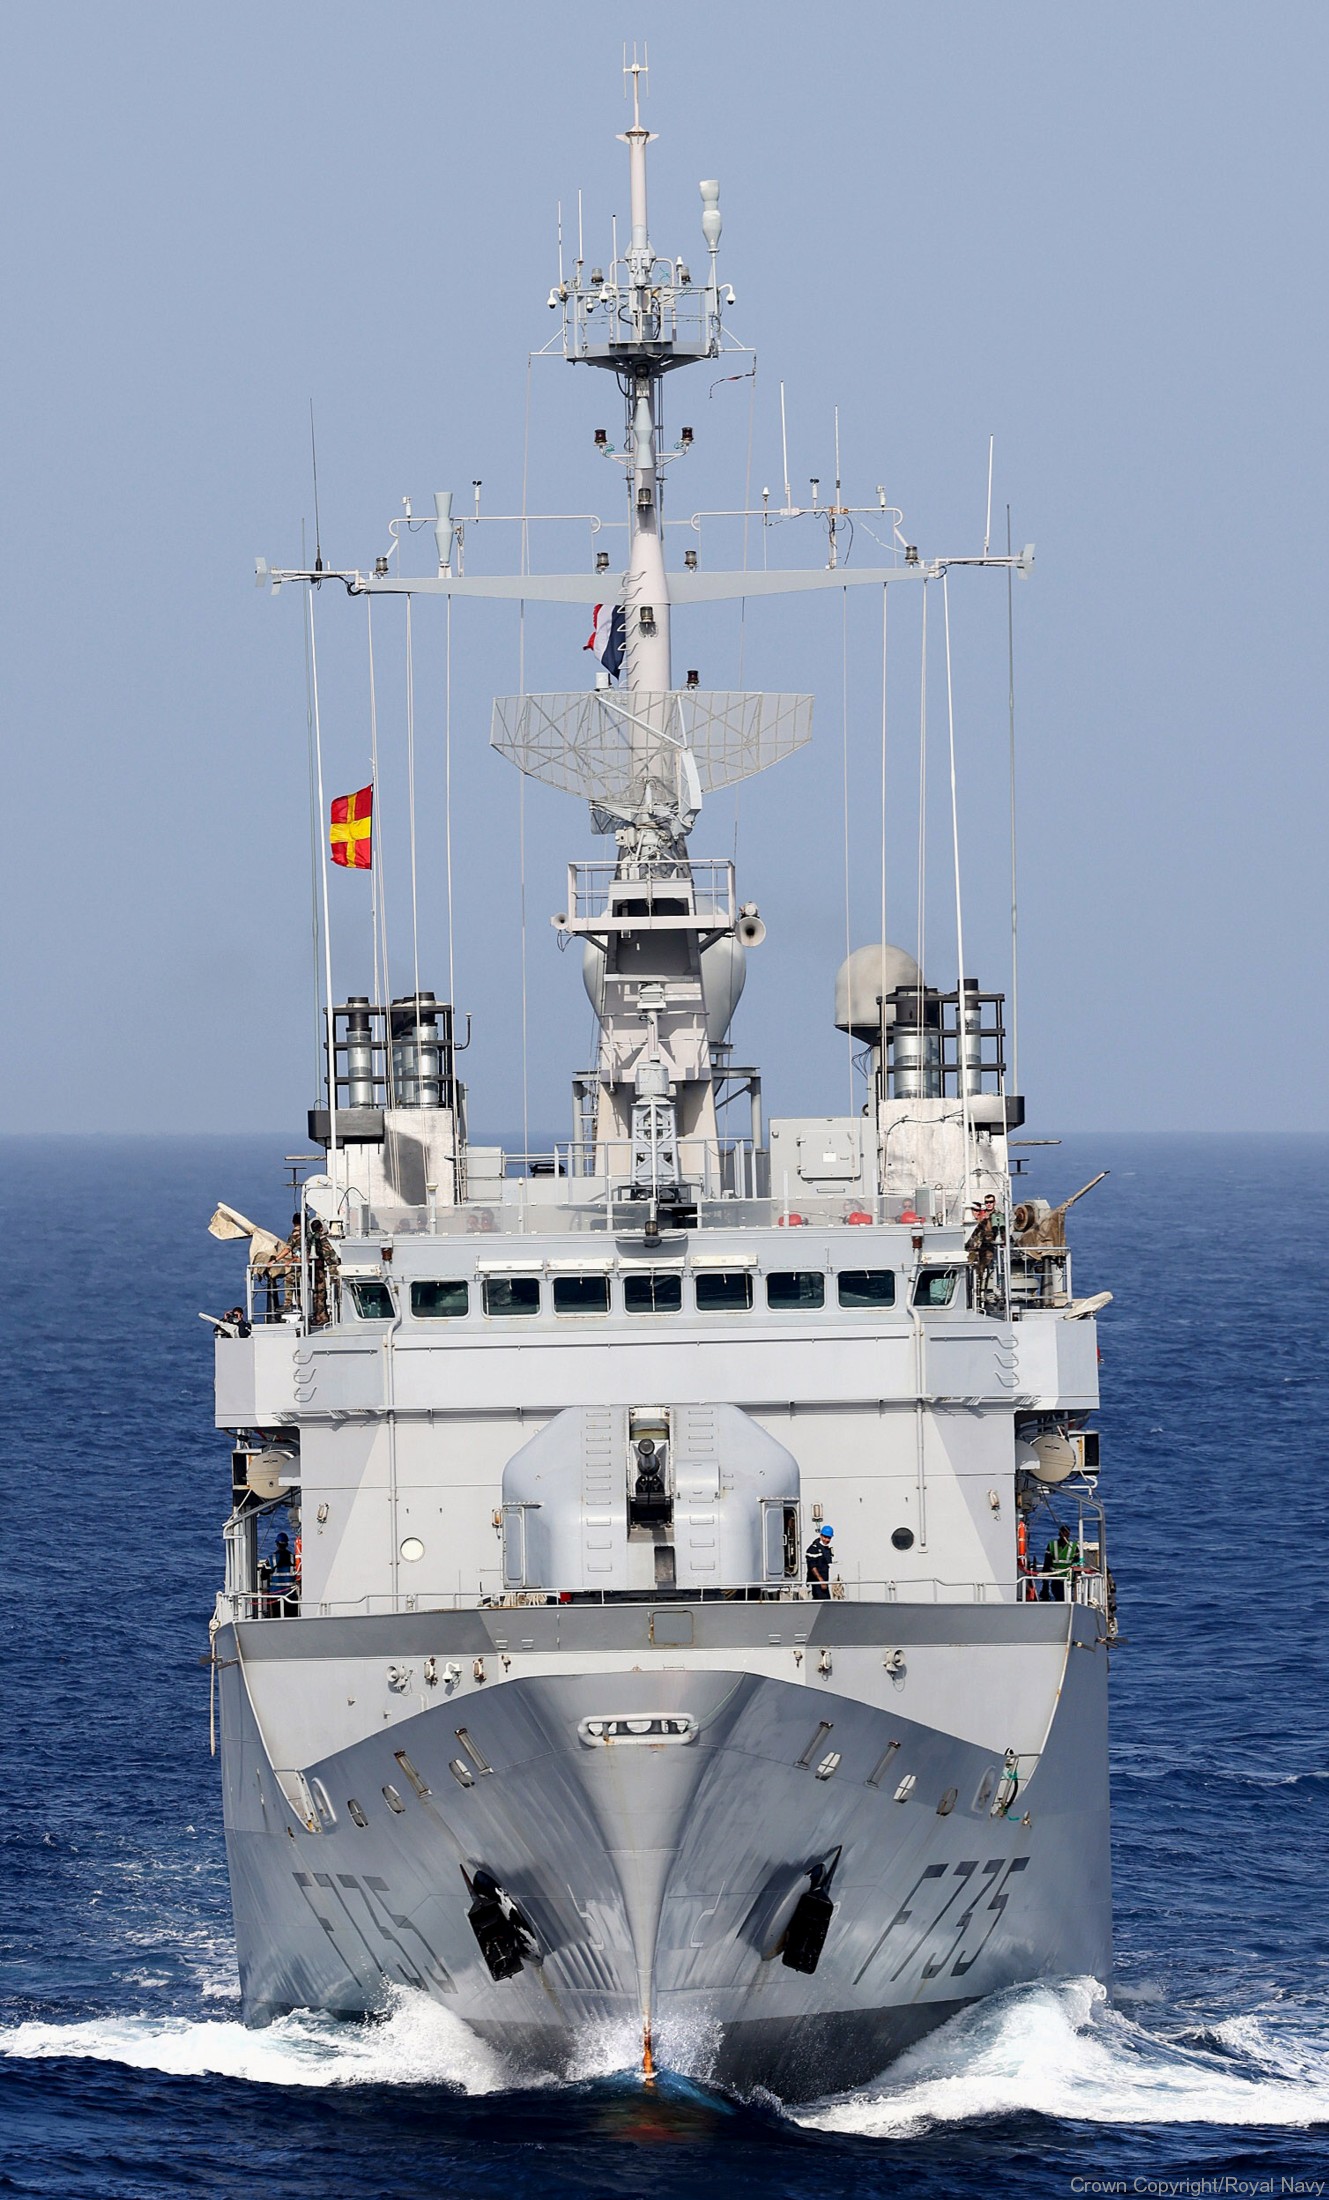 f-735 fs germinal floreal class frigate french navy marine nationale fregate de surveillance 15